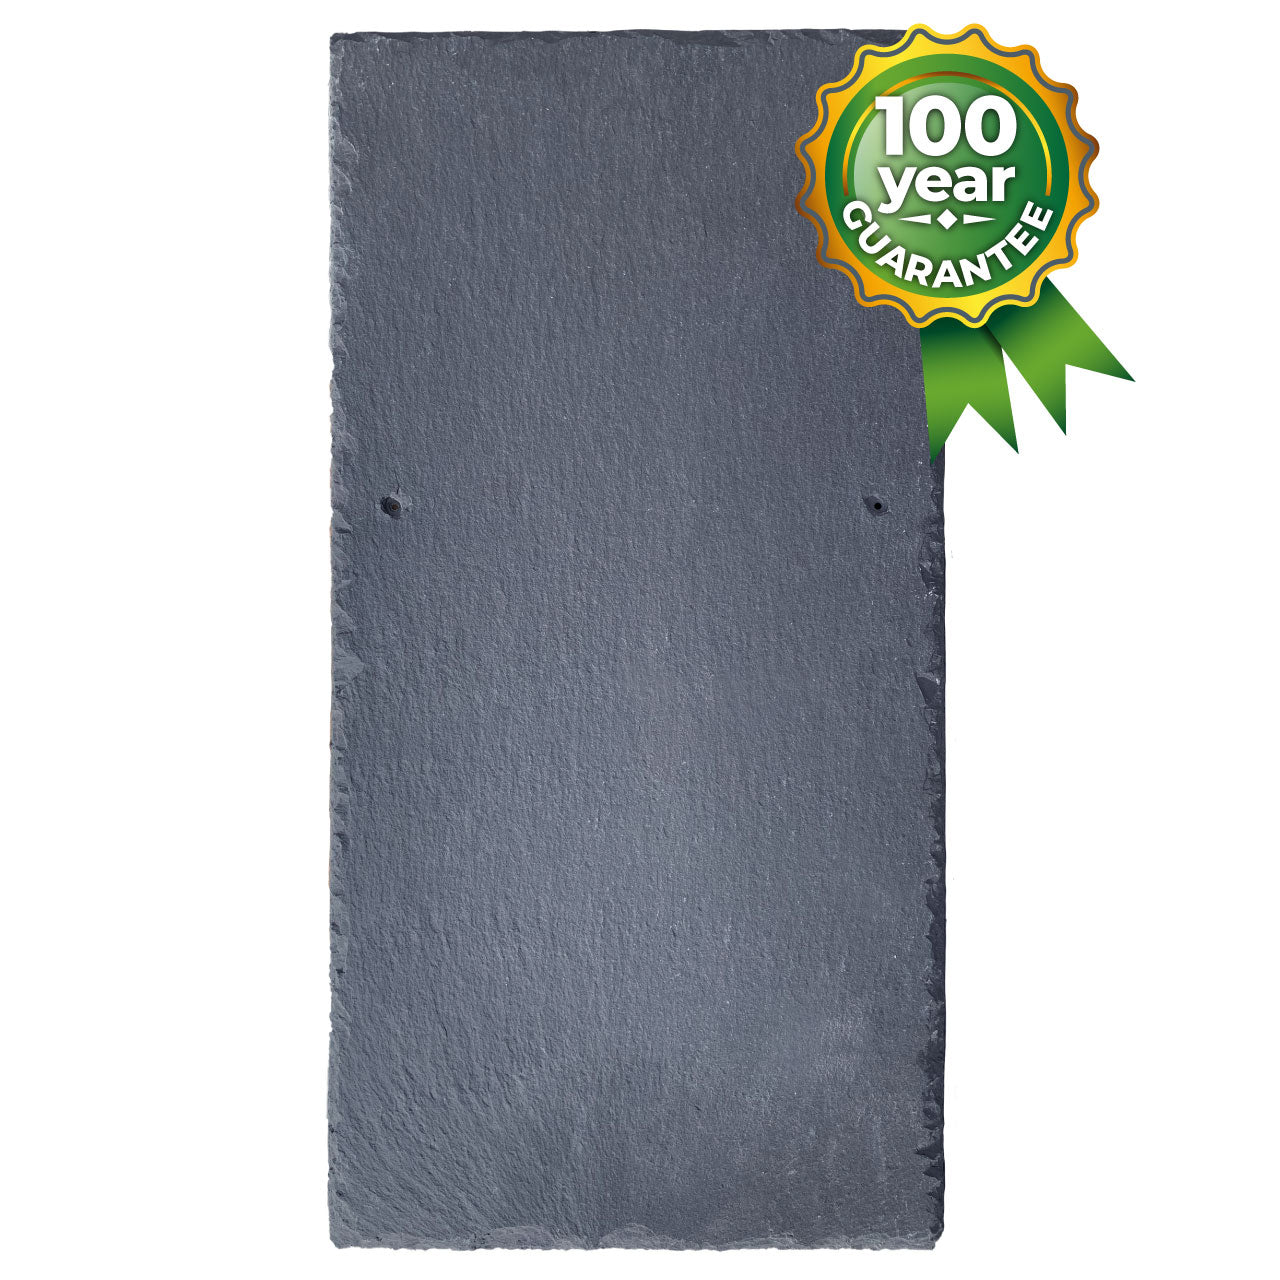 Madog grey slate R628, Roofing Slate Direct